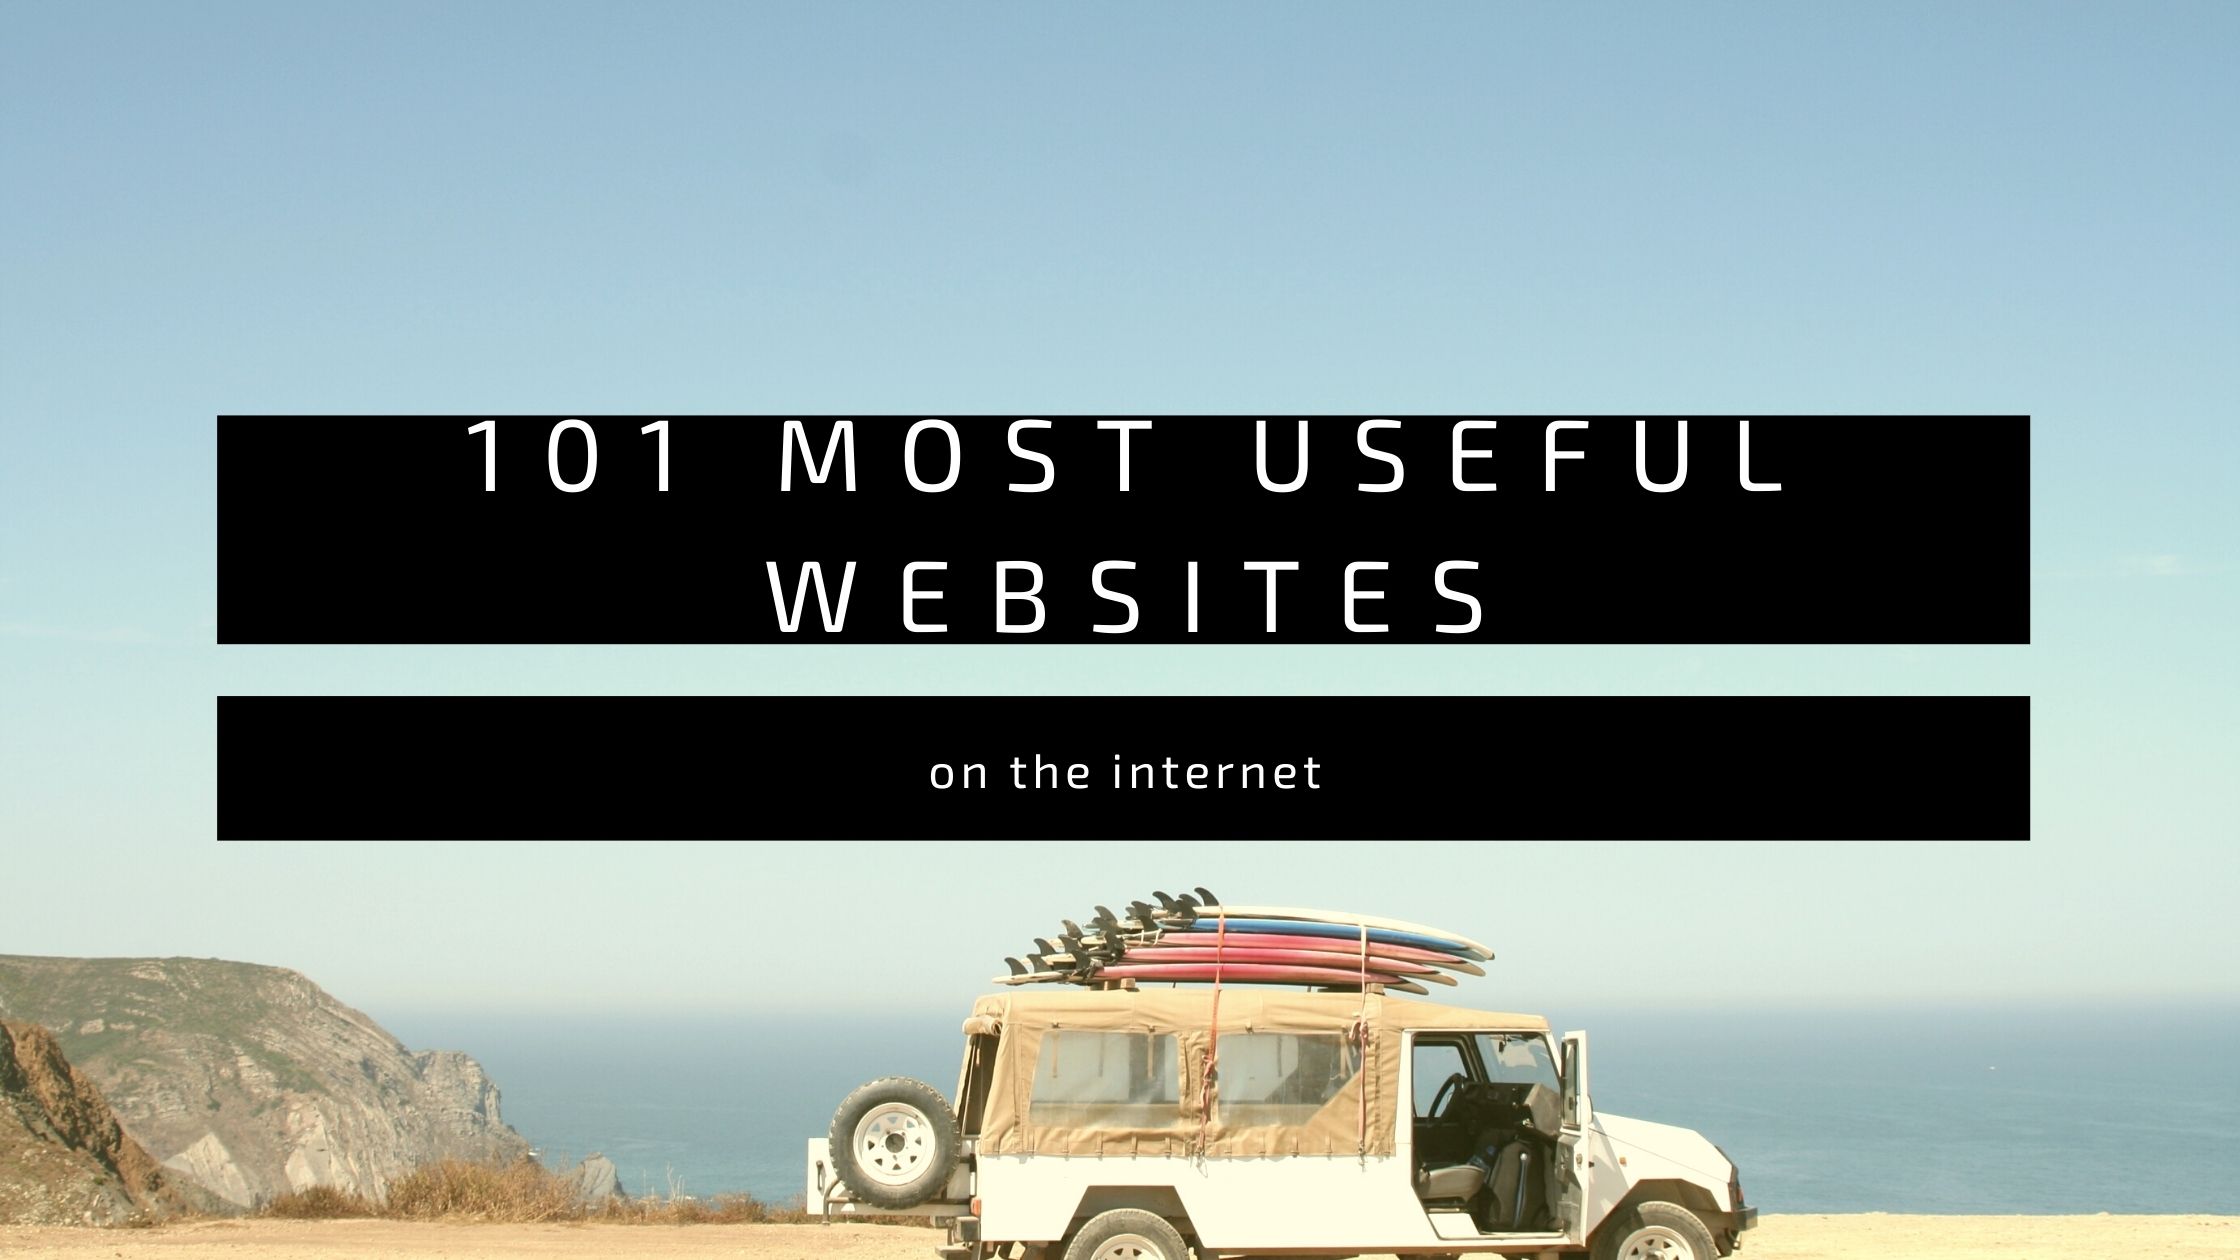 101 Most useful websites